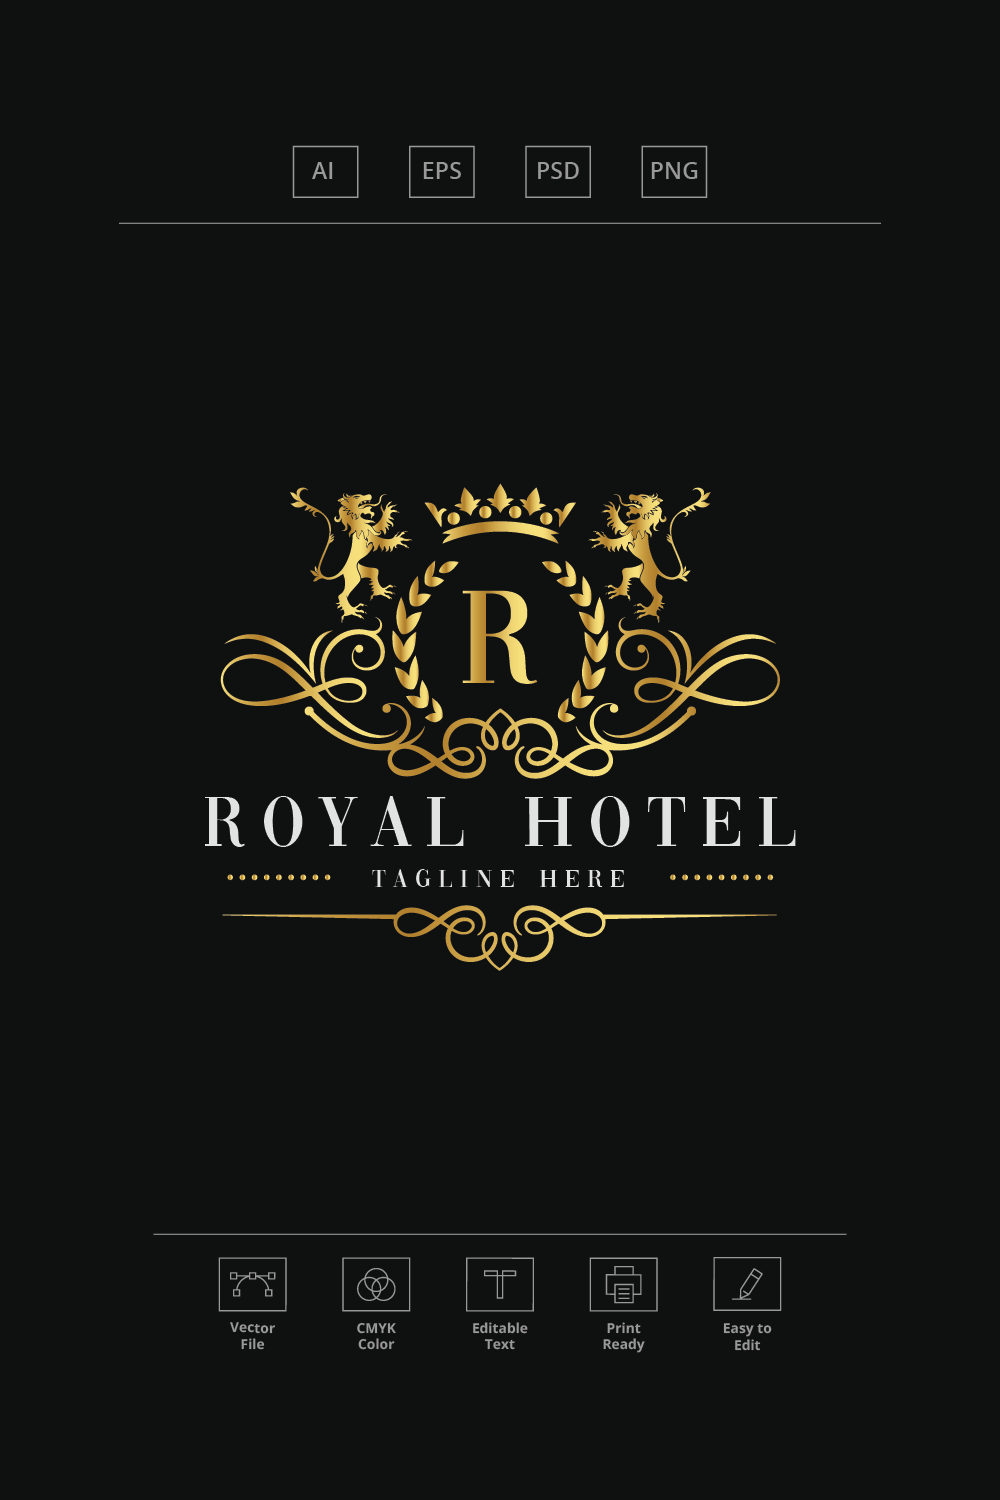 Royal Hotel Letter R Logo pinterest preview image.